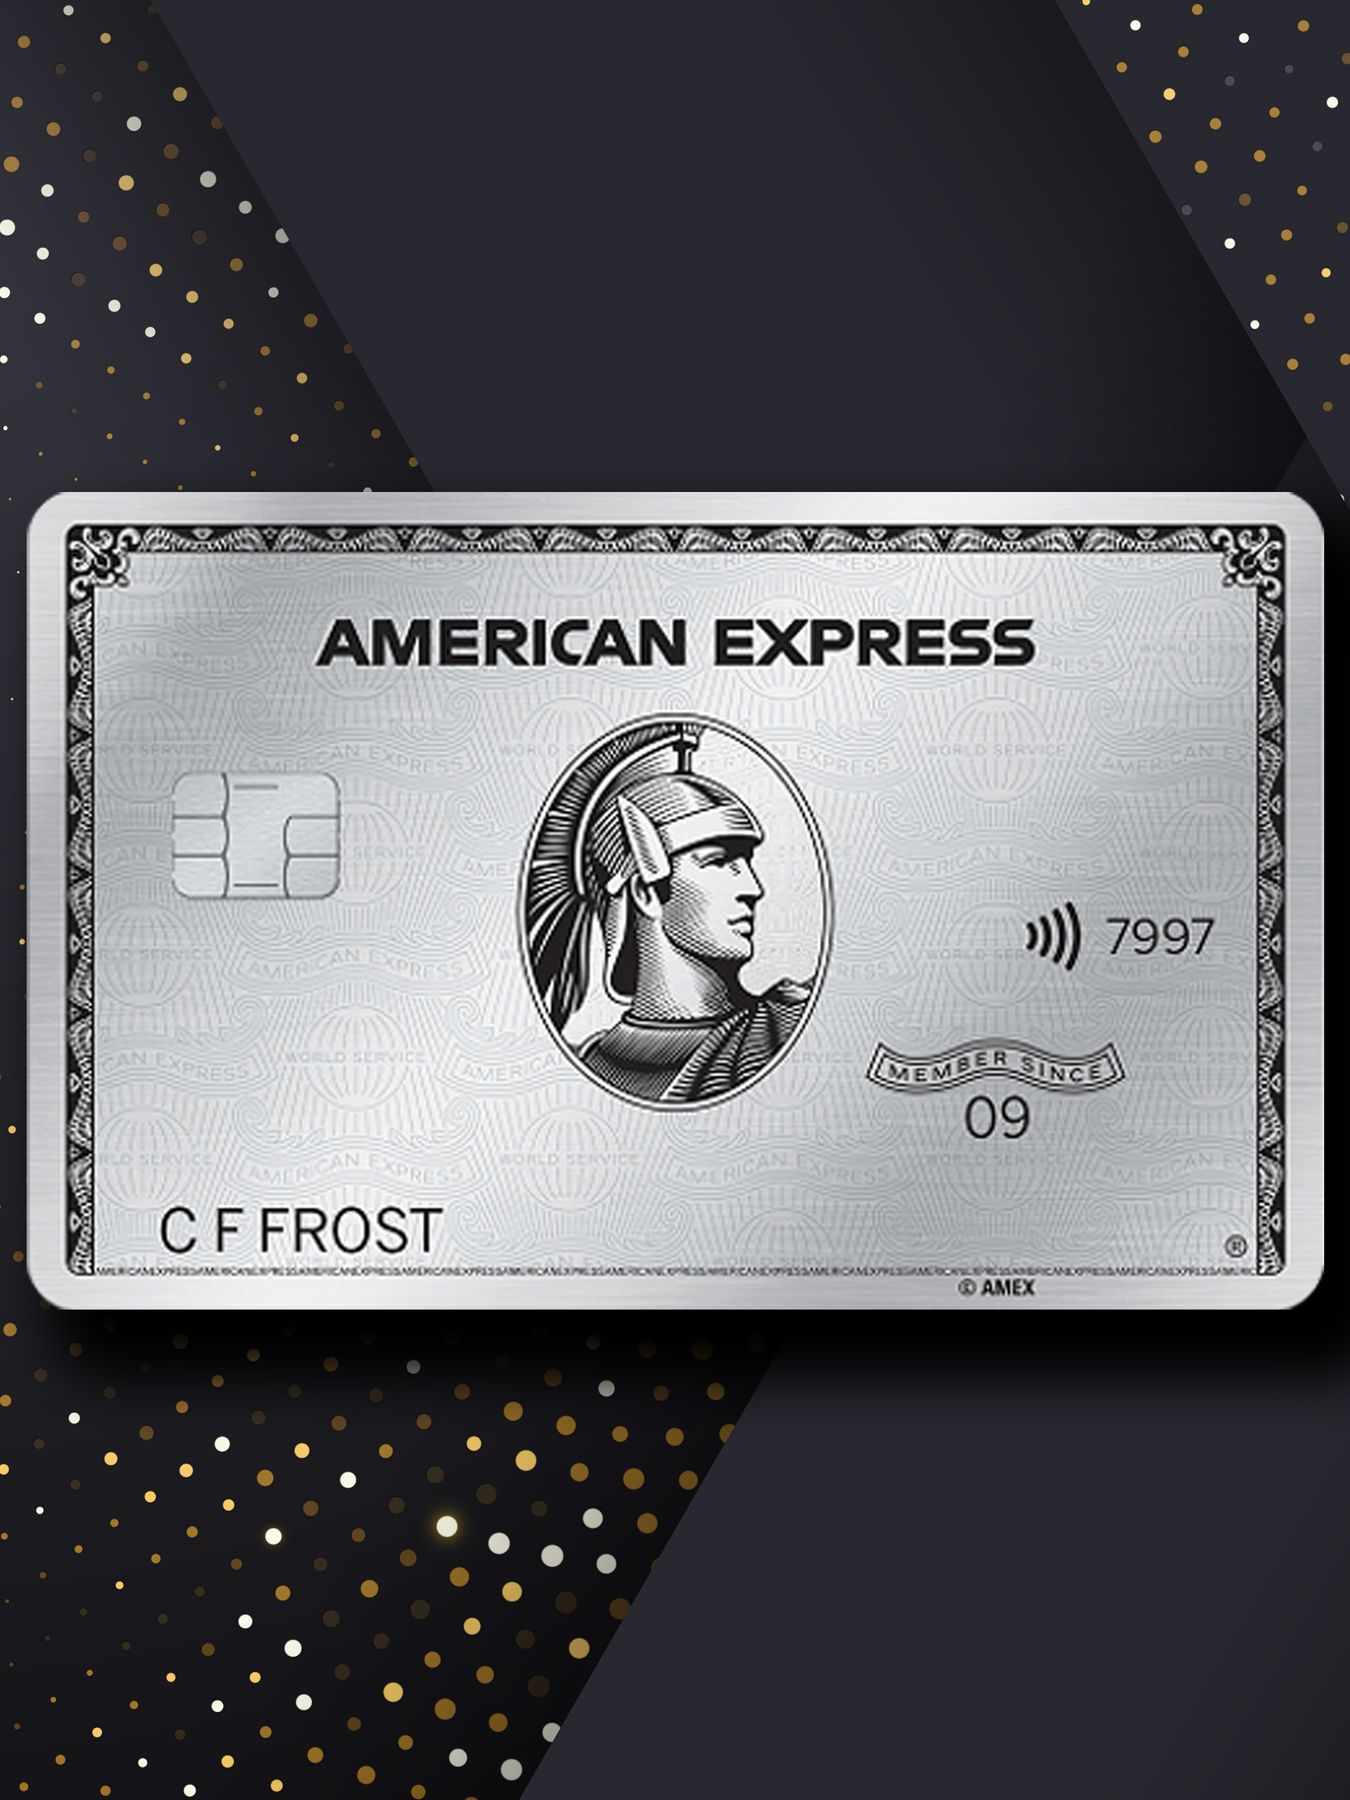 American Express Platinum card review: Luxury travel perks | CNN Underscored